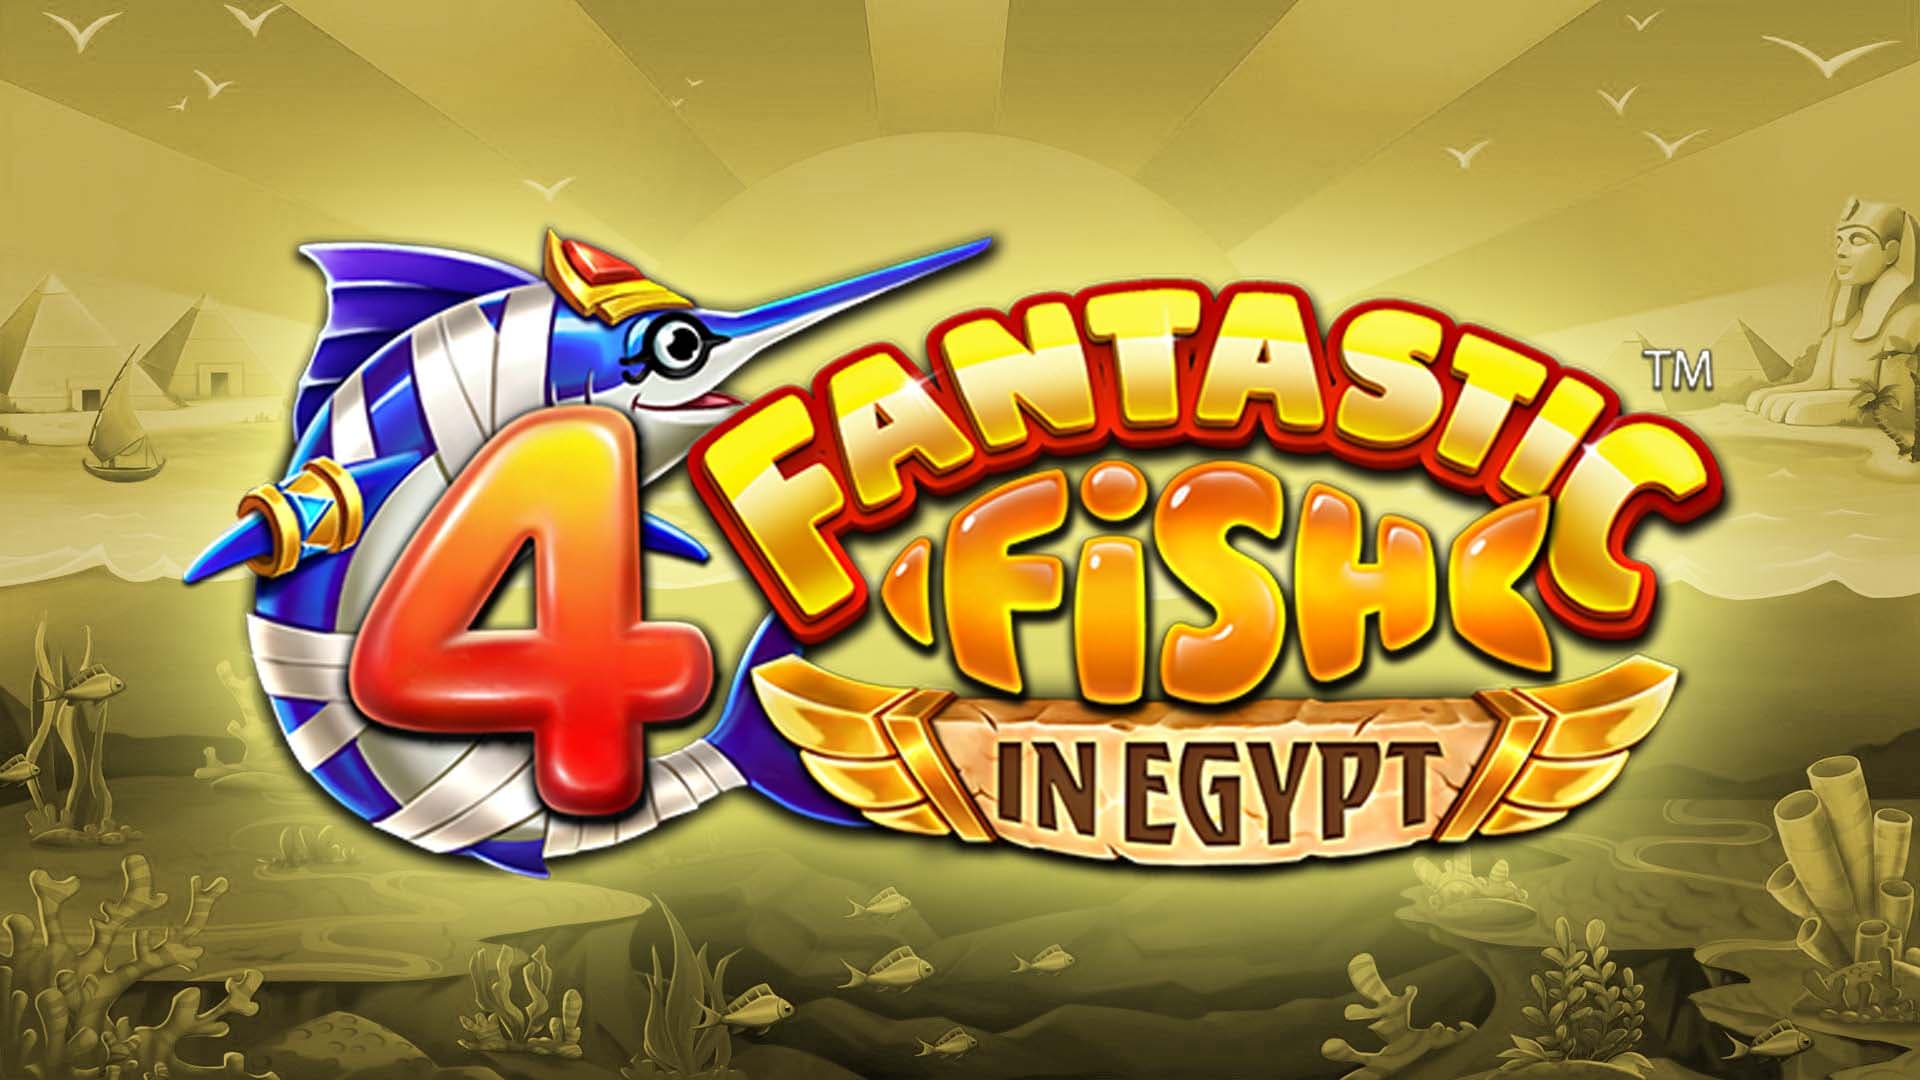 4 Fantastic Fish In Egypt Slot